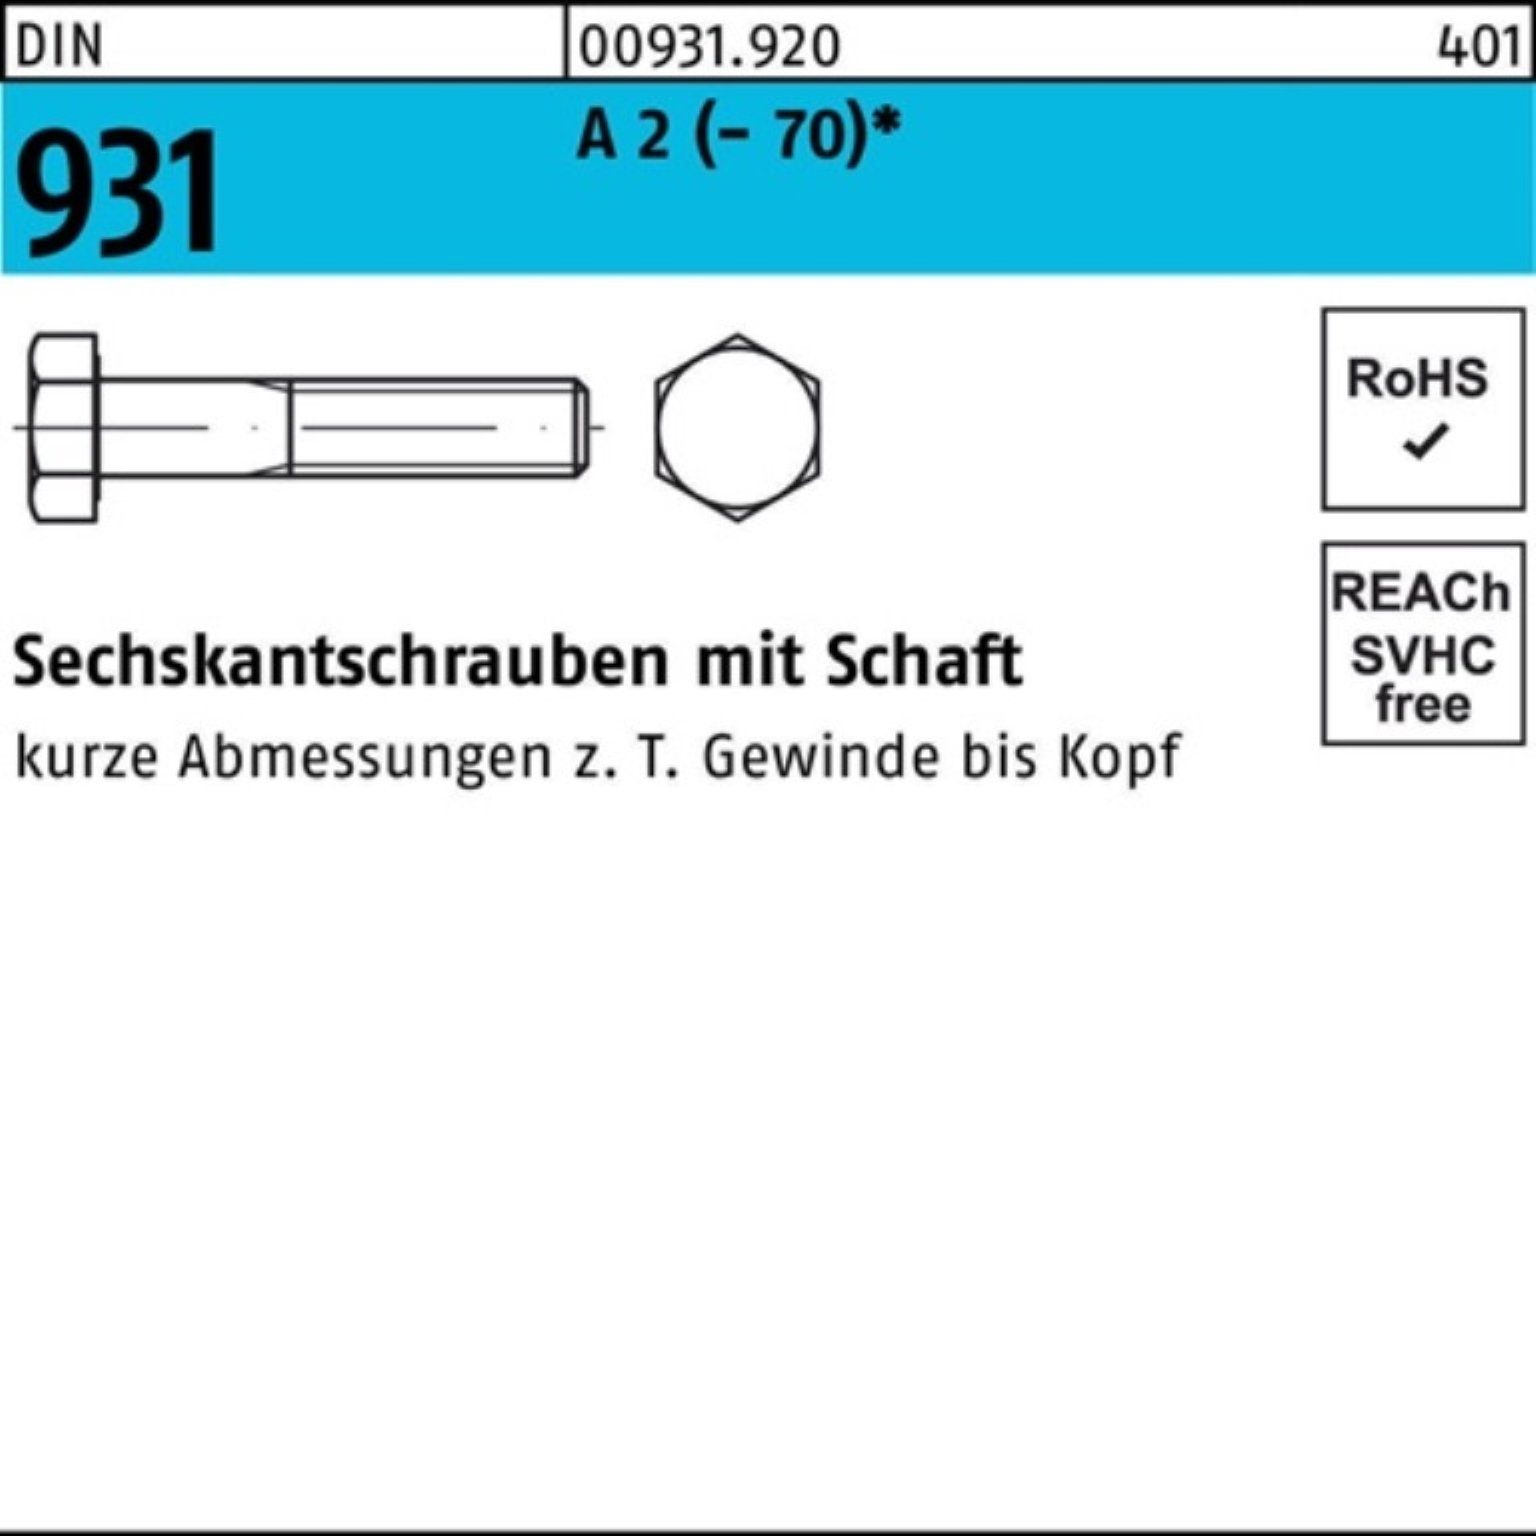 Reyher Sechskantschraube 100er Pack Sechskantschraube DIN 931 Schaft M8x 70 A 2 (70) 100 Stü | Schrauben